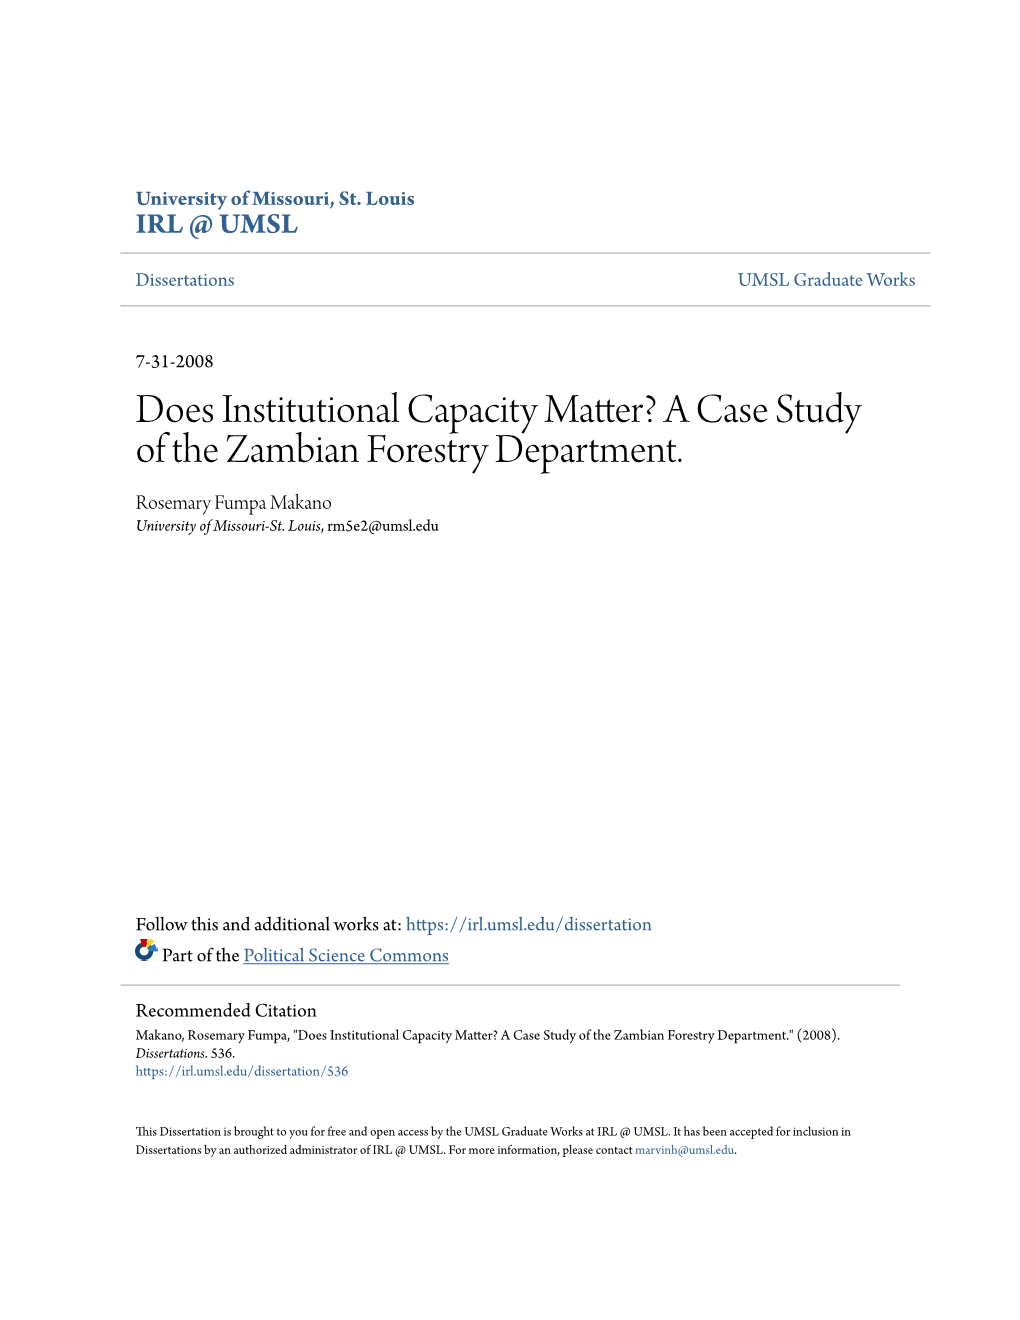 A Case Study of the Zambian Forestry Department. Rosemary Fumpa Makano University of Missouri-St